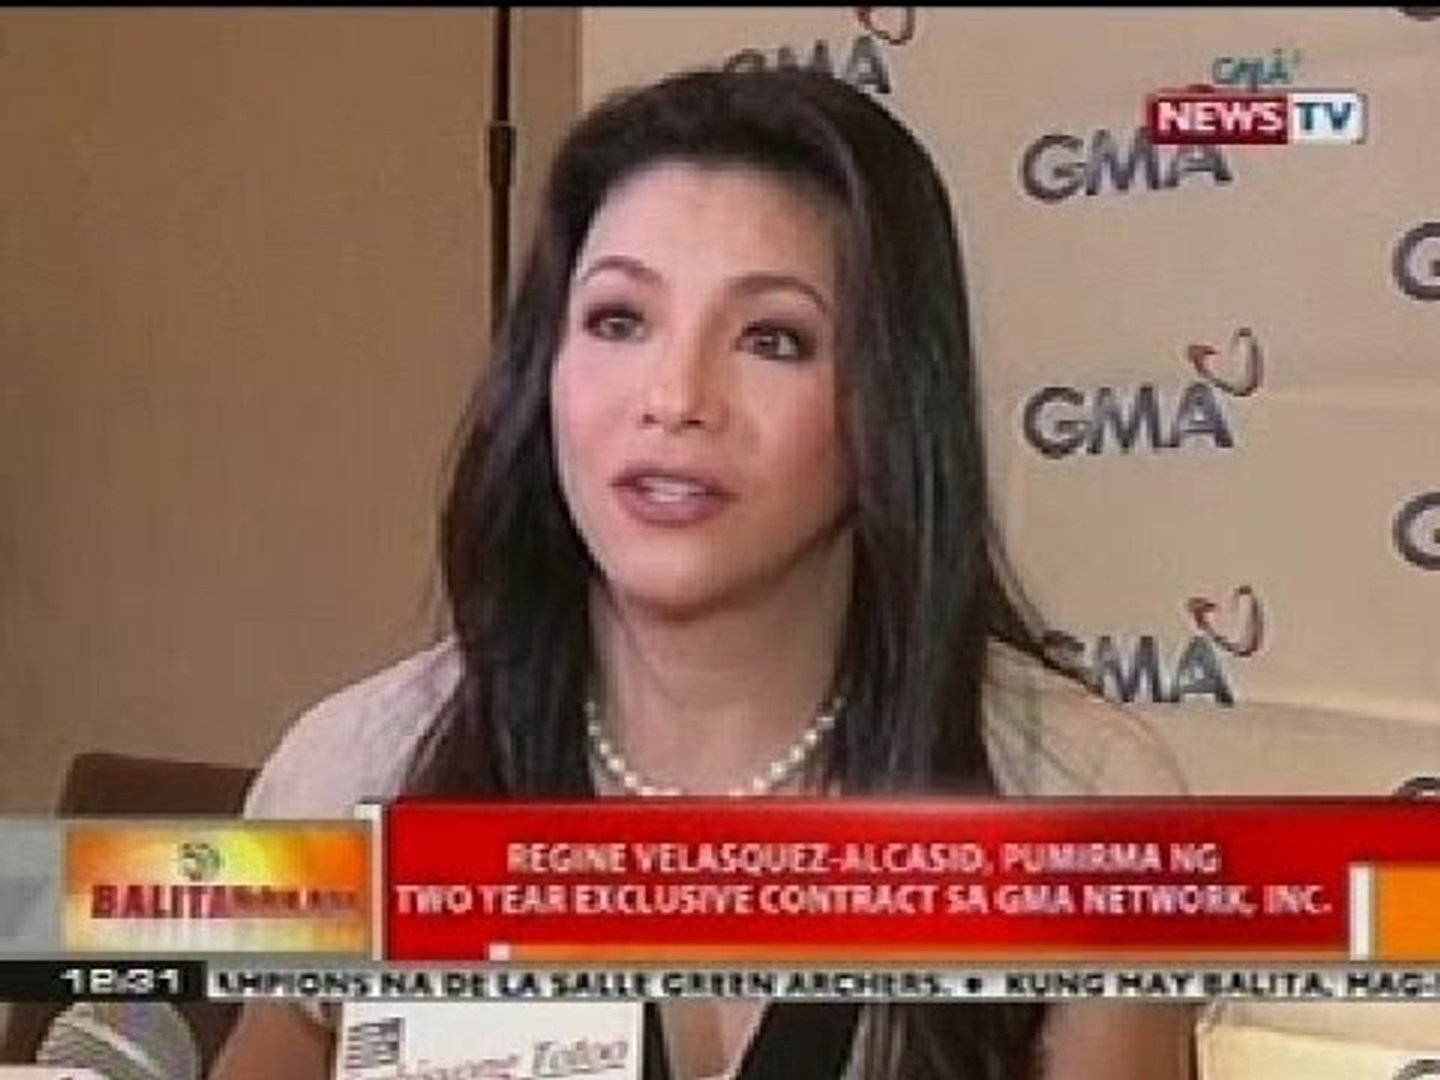 BT: Regine Velasquez-Alcasid, pumirma ng 2 year exclusive contract sa GMA Network Inc.